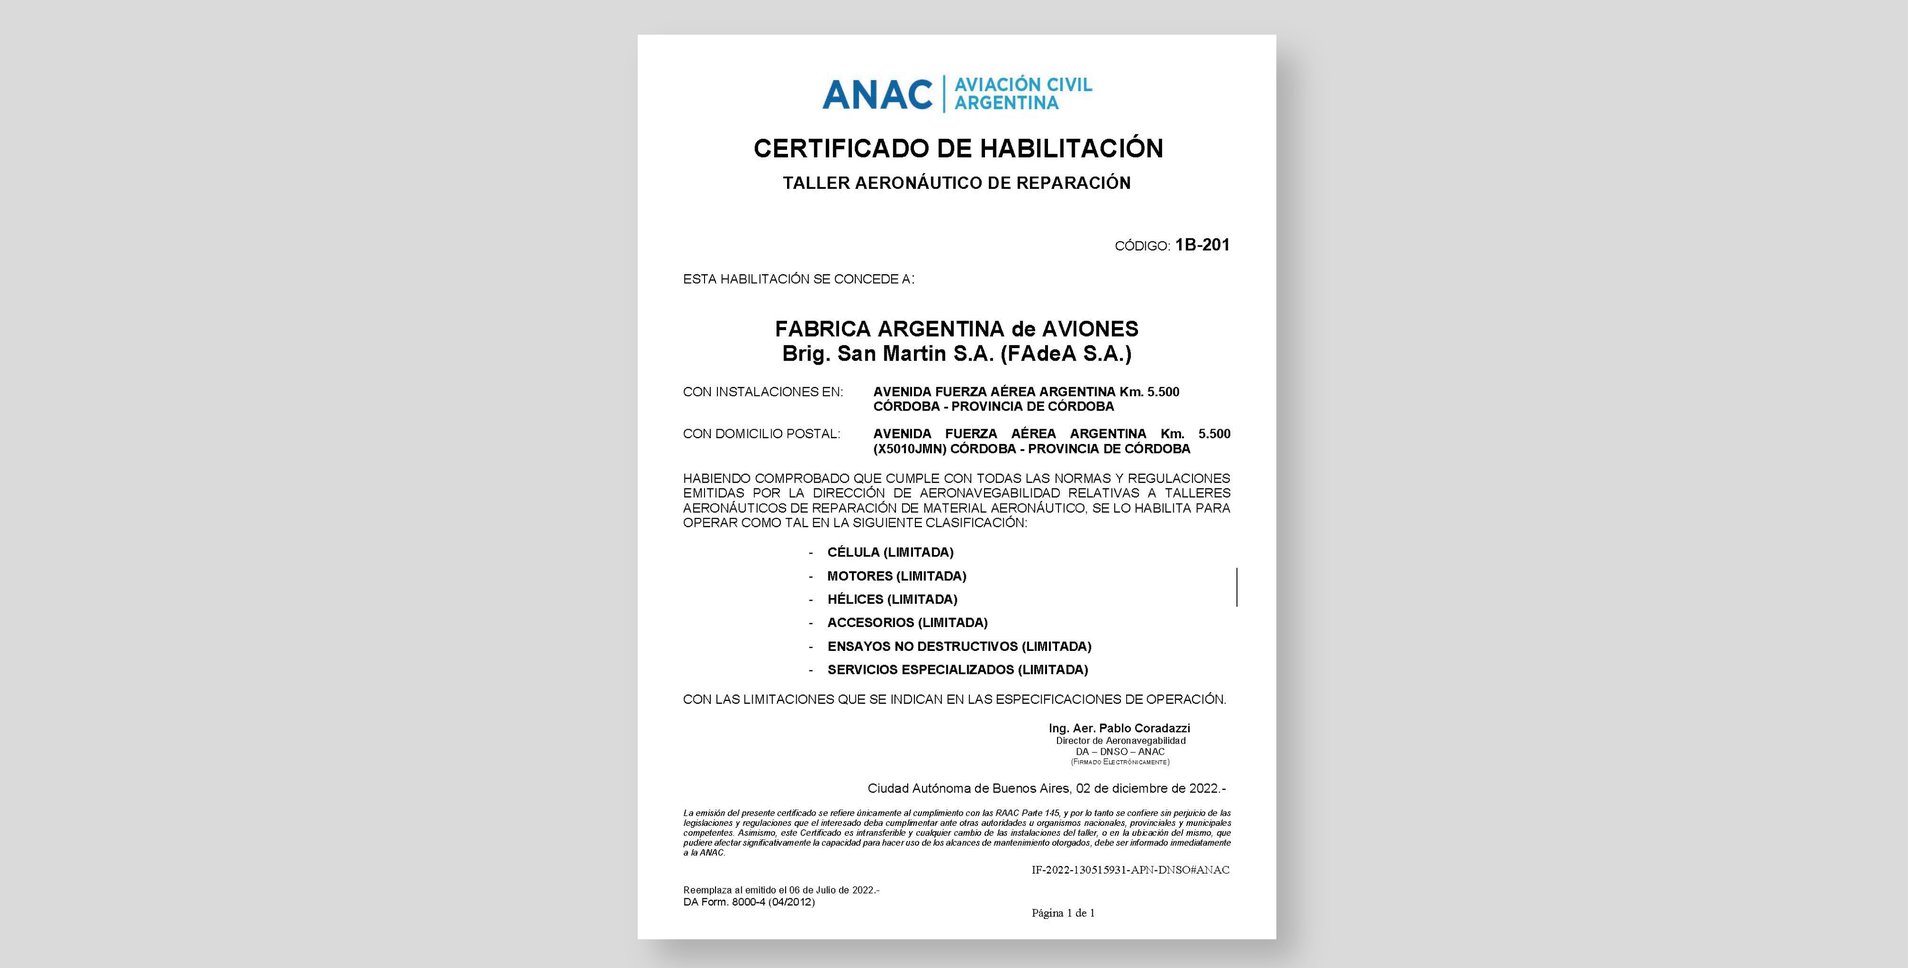 ANAC - Certificado de Habilitación Taller 1B-201